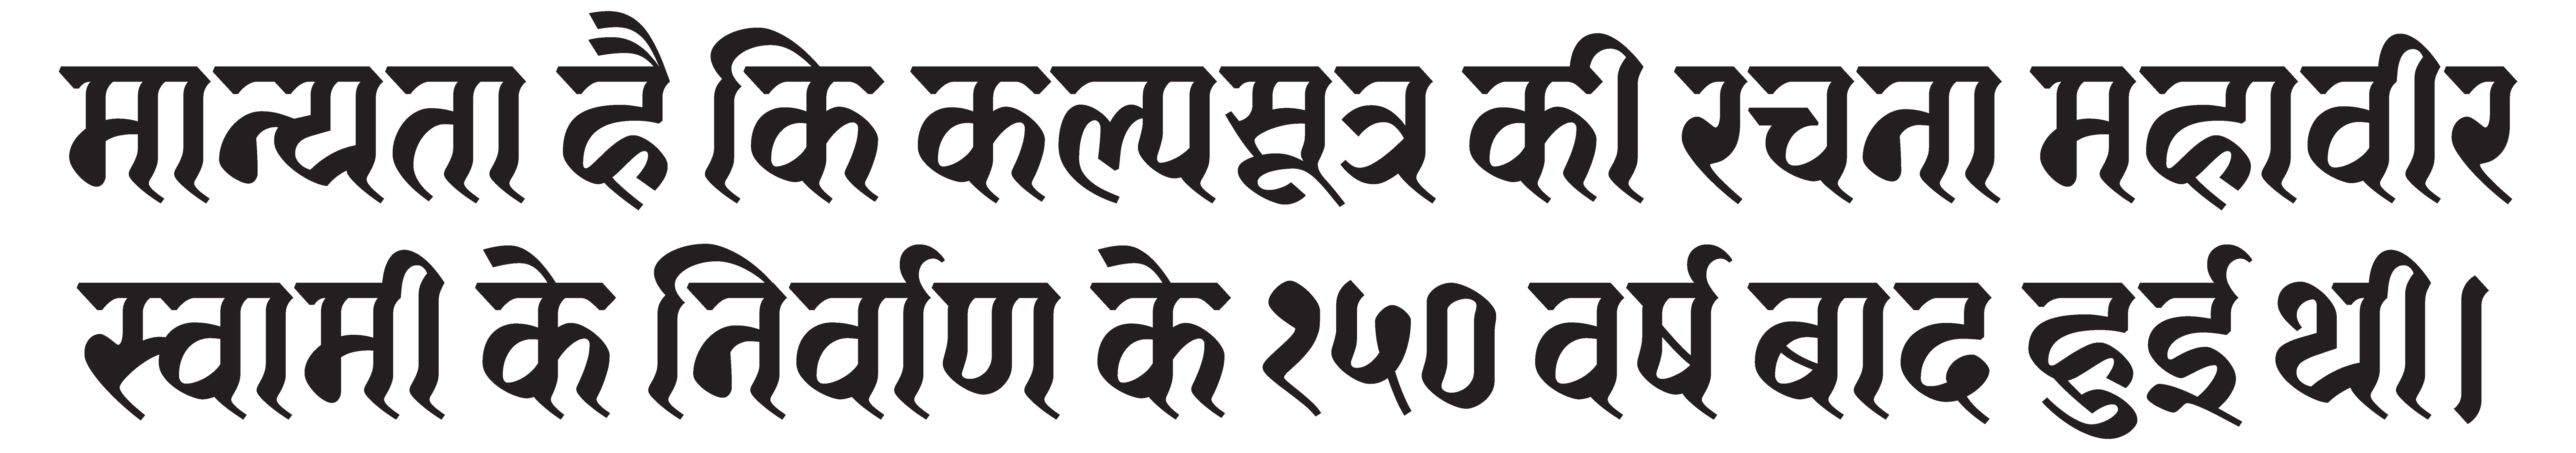 Jaini typeface text sample